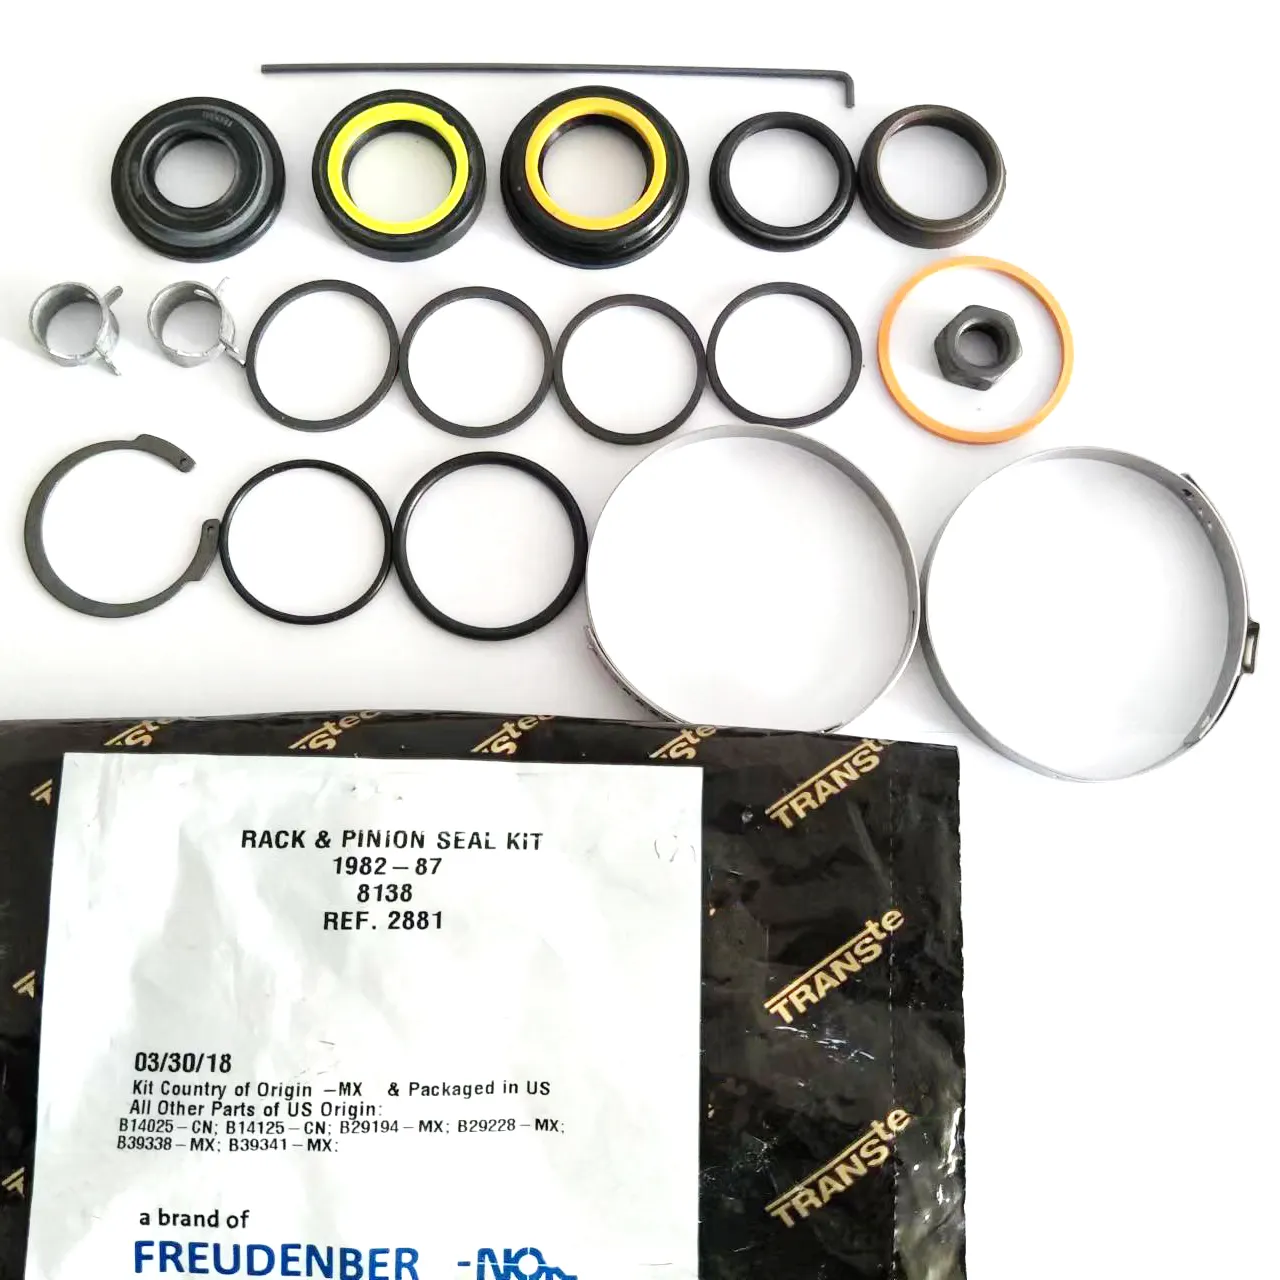 TRANSTE C Hydraulic rack and pinion seal kit 8138 REF.2881 Hydraulic Rack & Pinion seal kit power steering repair kit 1982-87